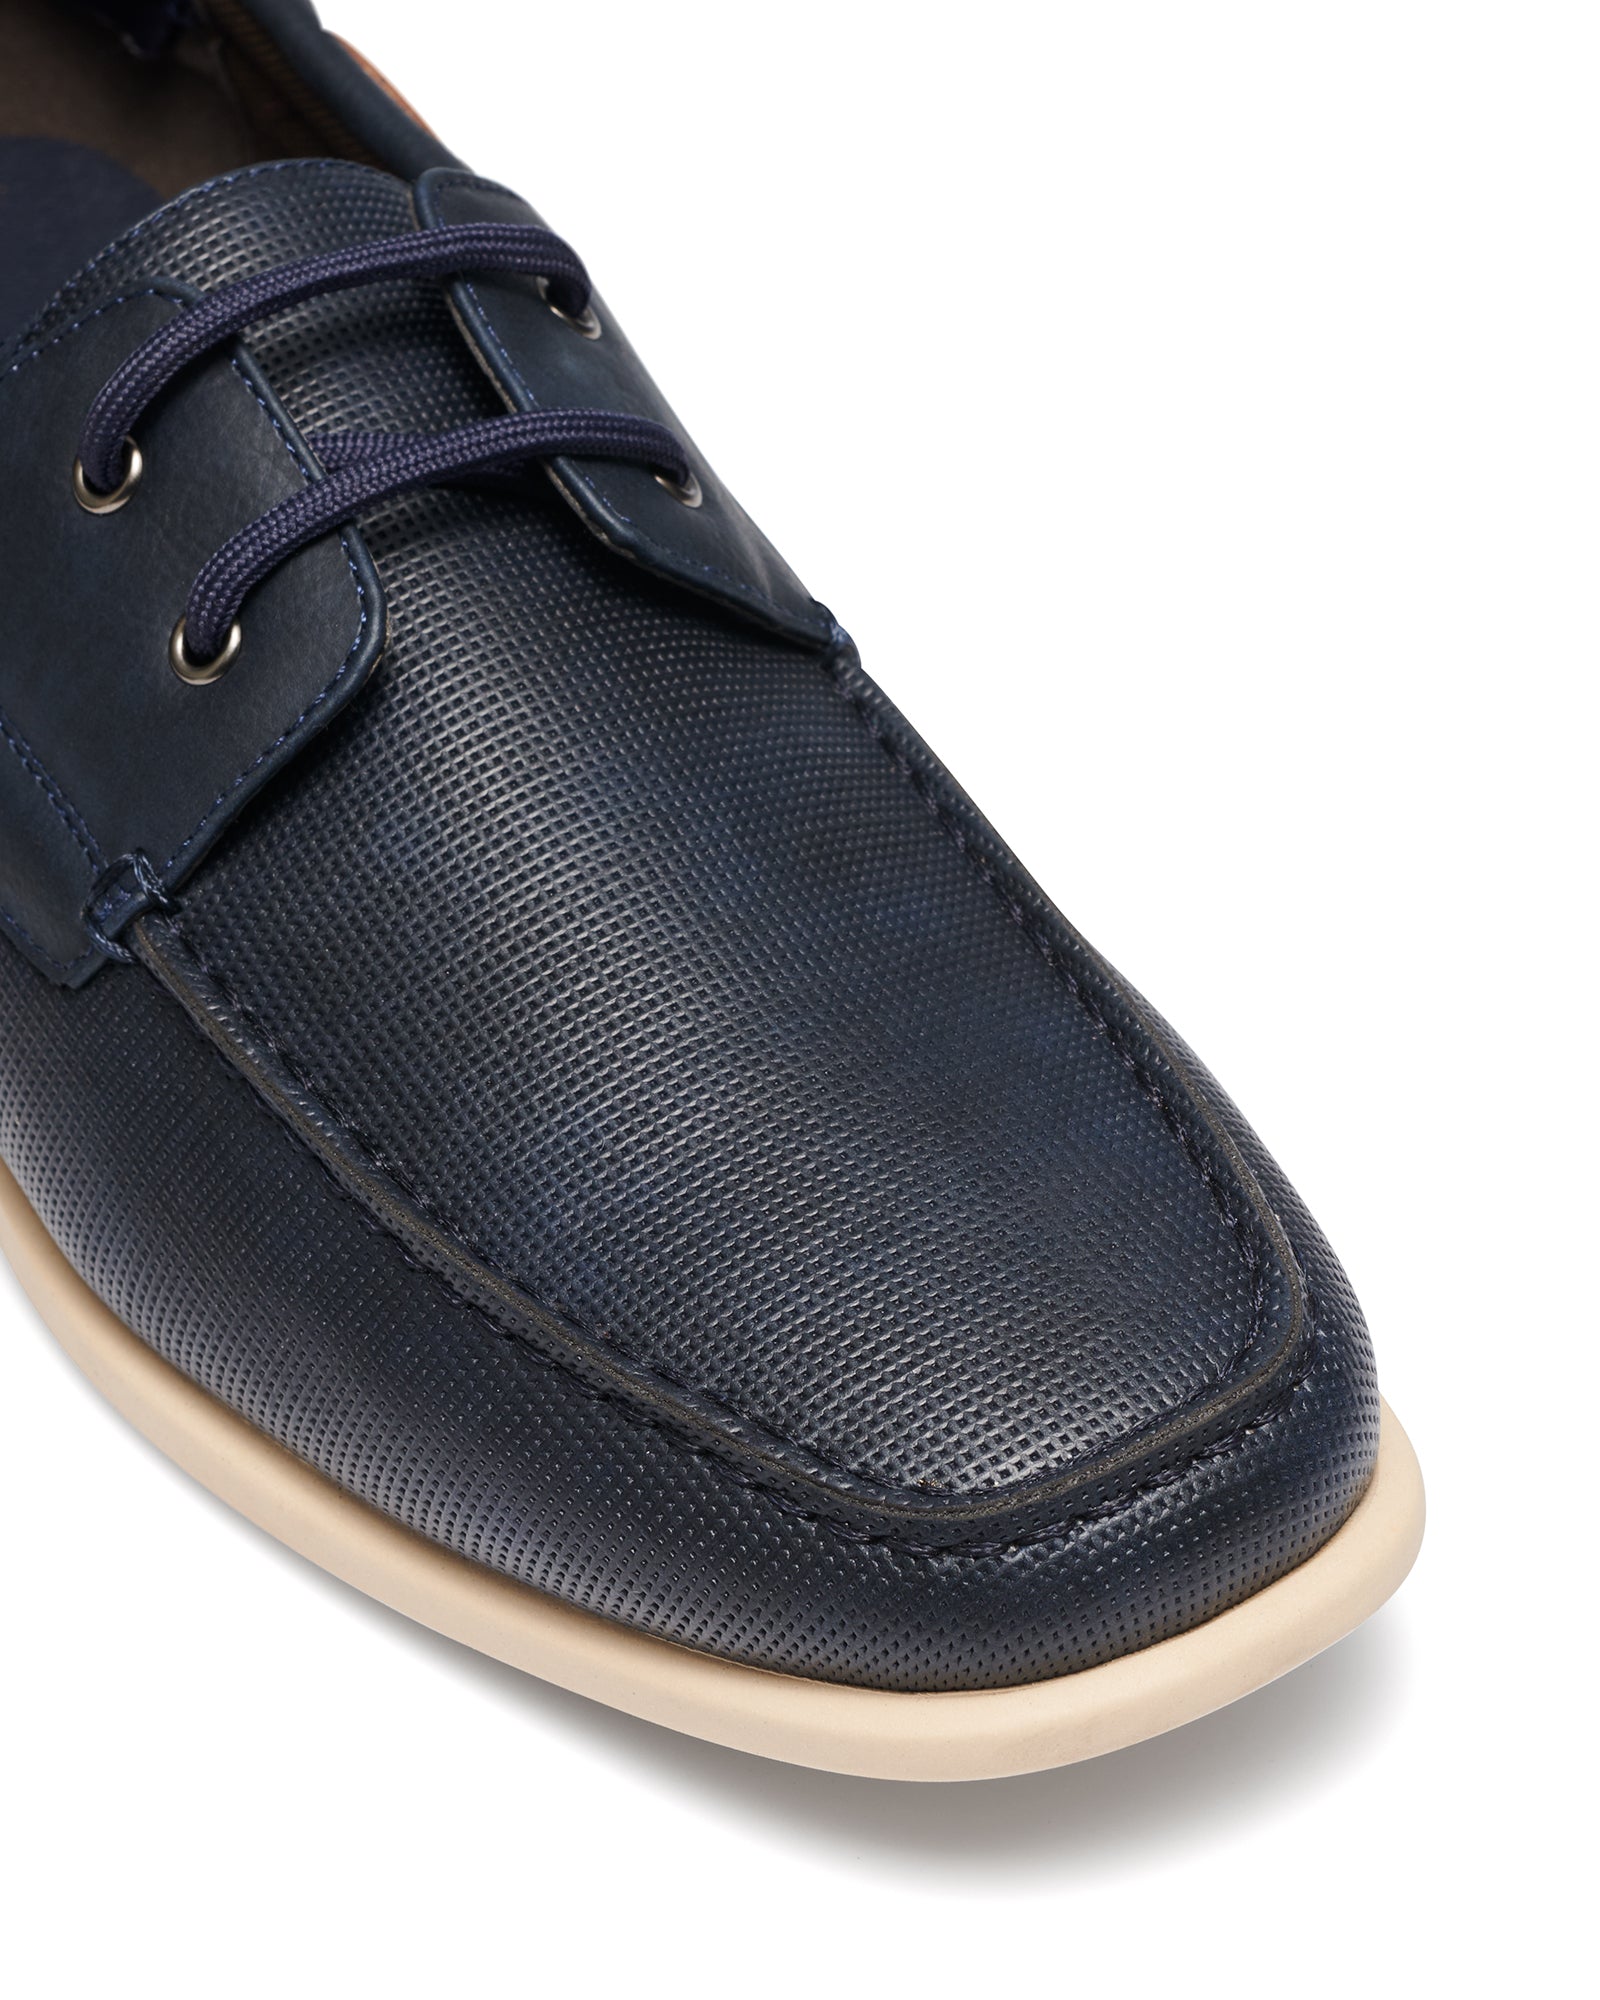 Uncut Shoes Langford Navy | Men's Boat Shoe | Loafer | Deck Shoe 